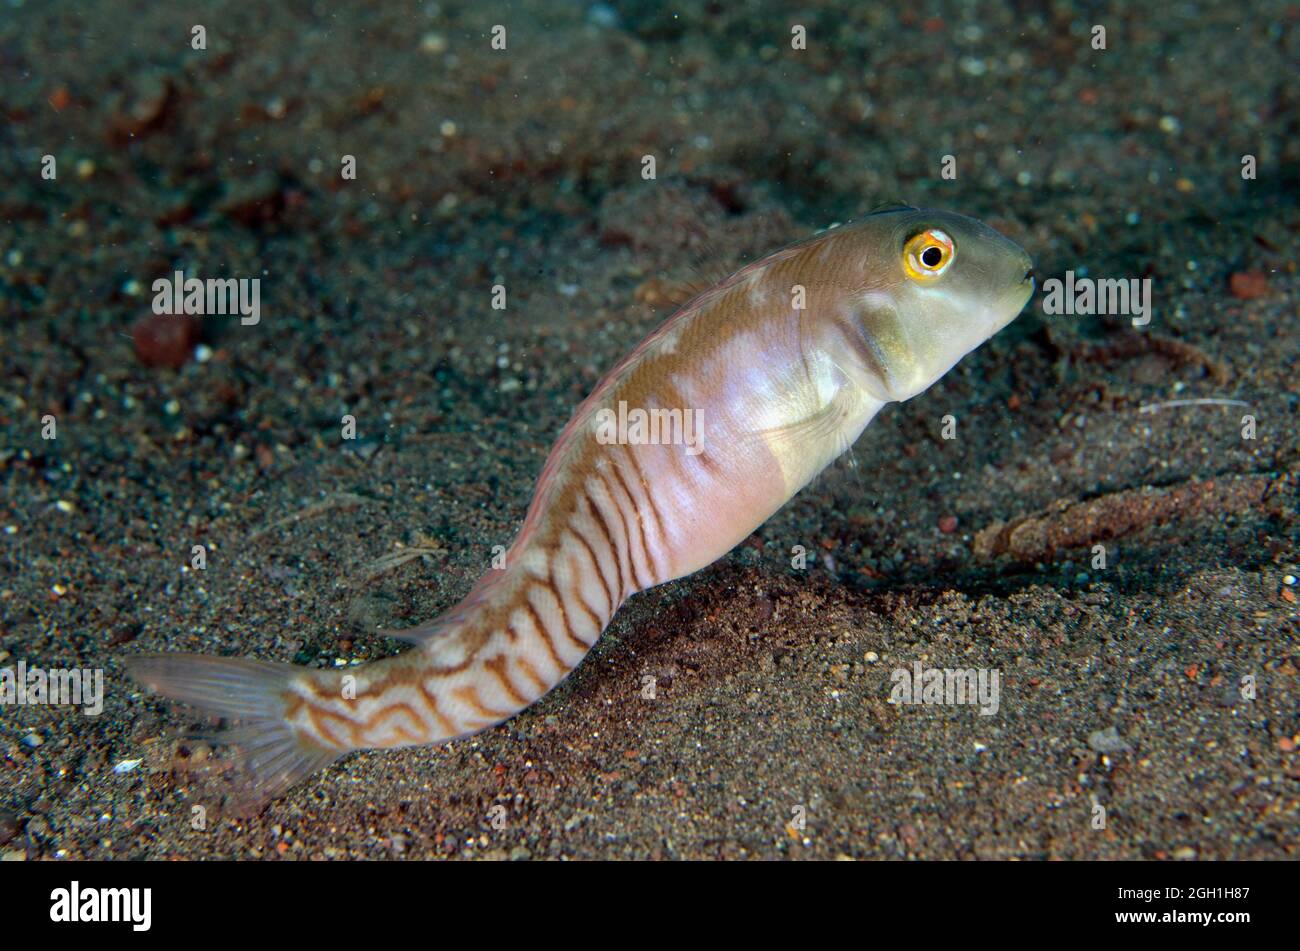 Collared Razorwrasse (Cymolutes torquatus), I Love Amed dive site, Amed, Karangasem Regency, Bali, Indonesia, Indian Ocean. Stock Photo